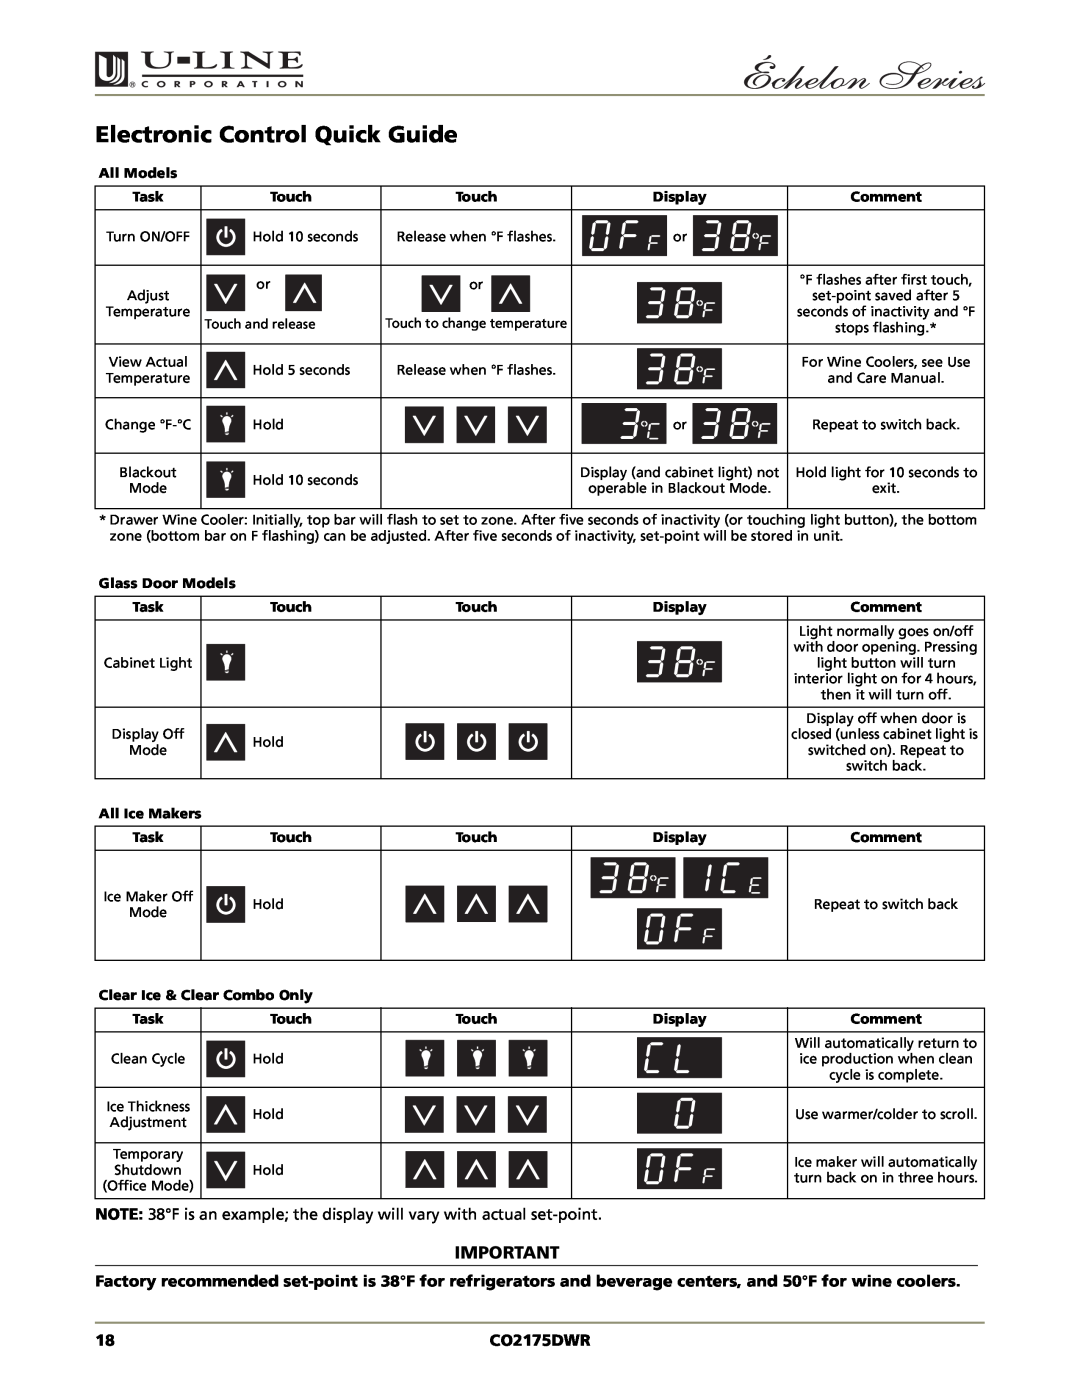 U-Line CO2175DWR manual Electronic Control Quick Guide 